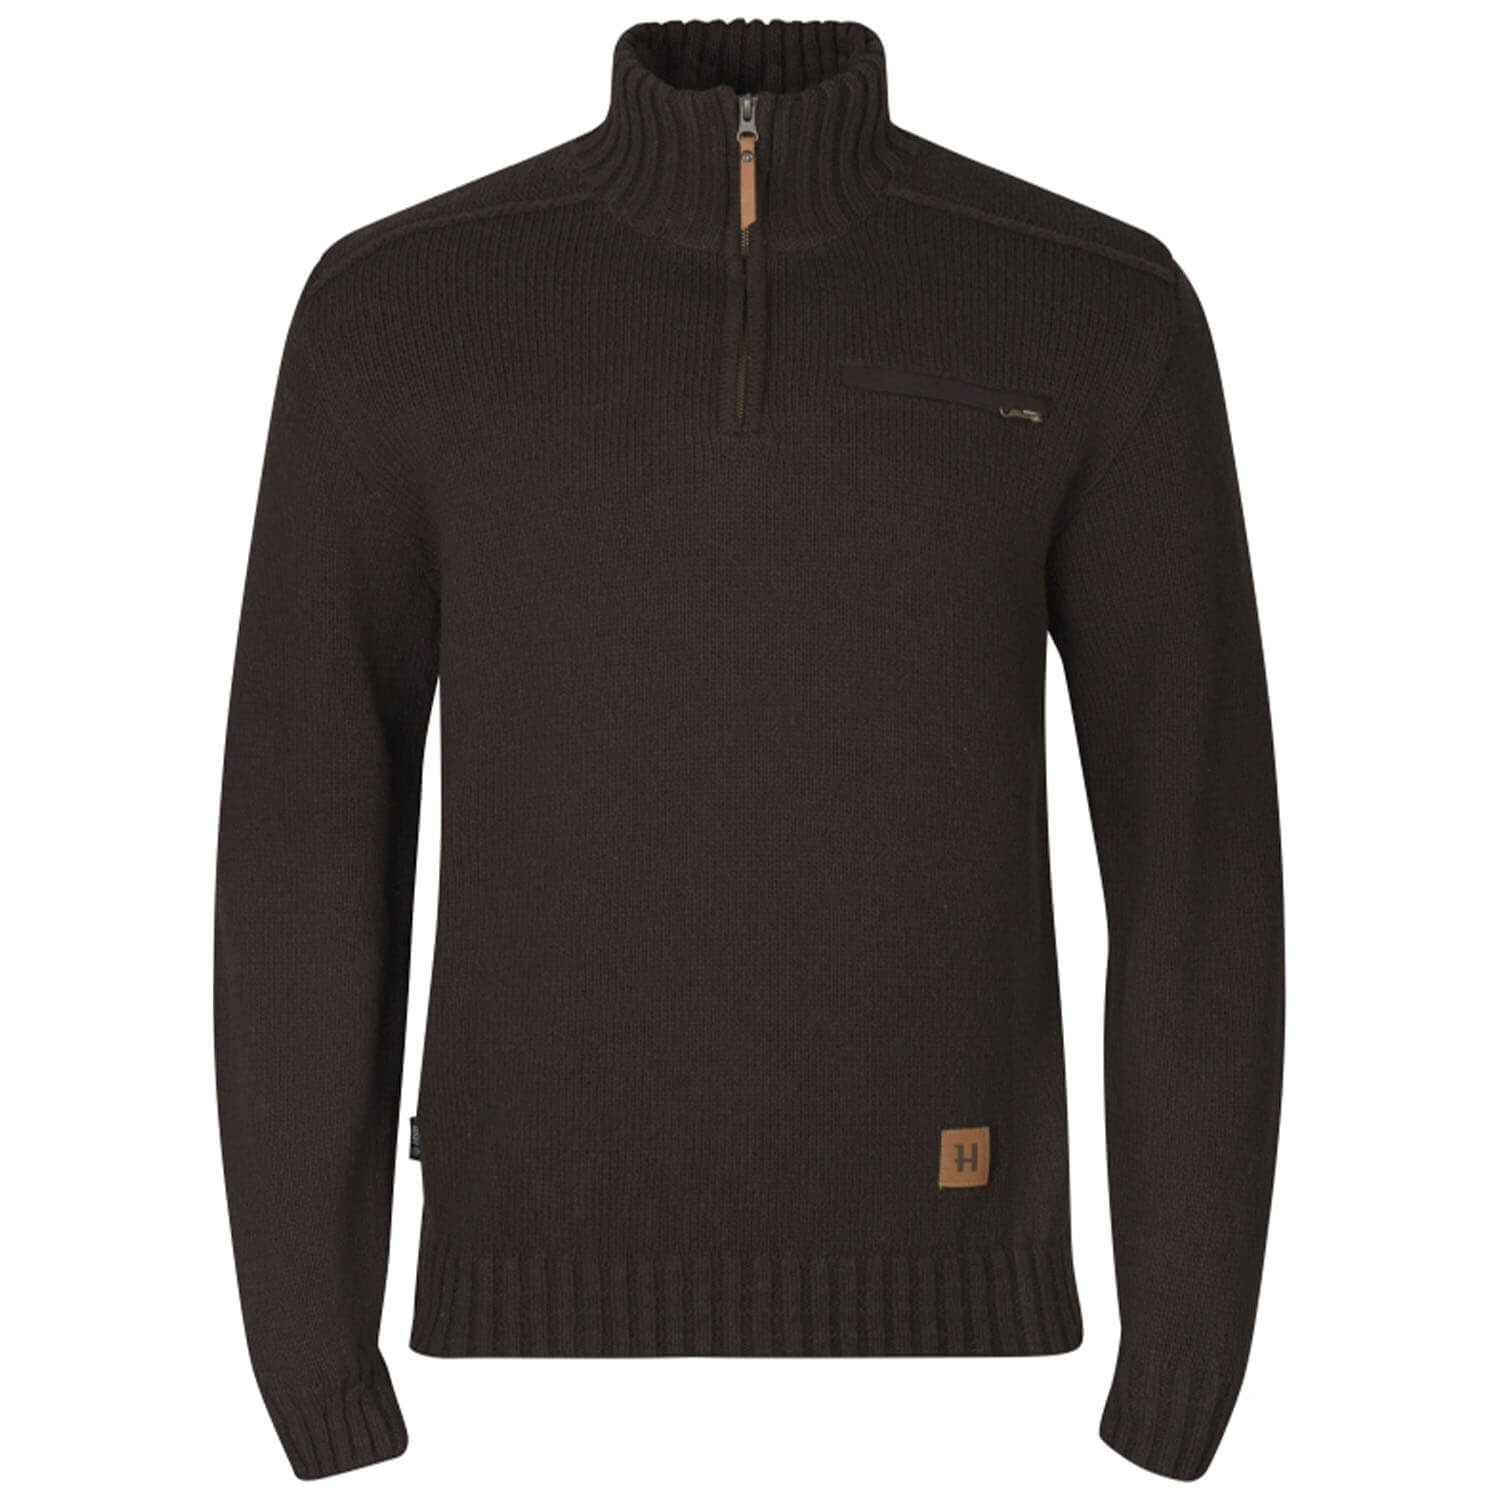 Härkila sweater annaboda 2.0 HSP (demitasse brown) - Hunting Clothing